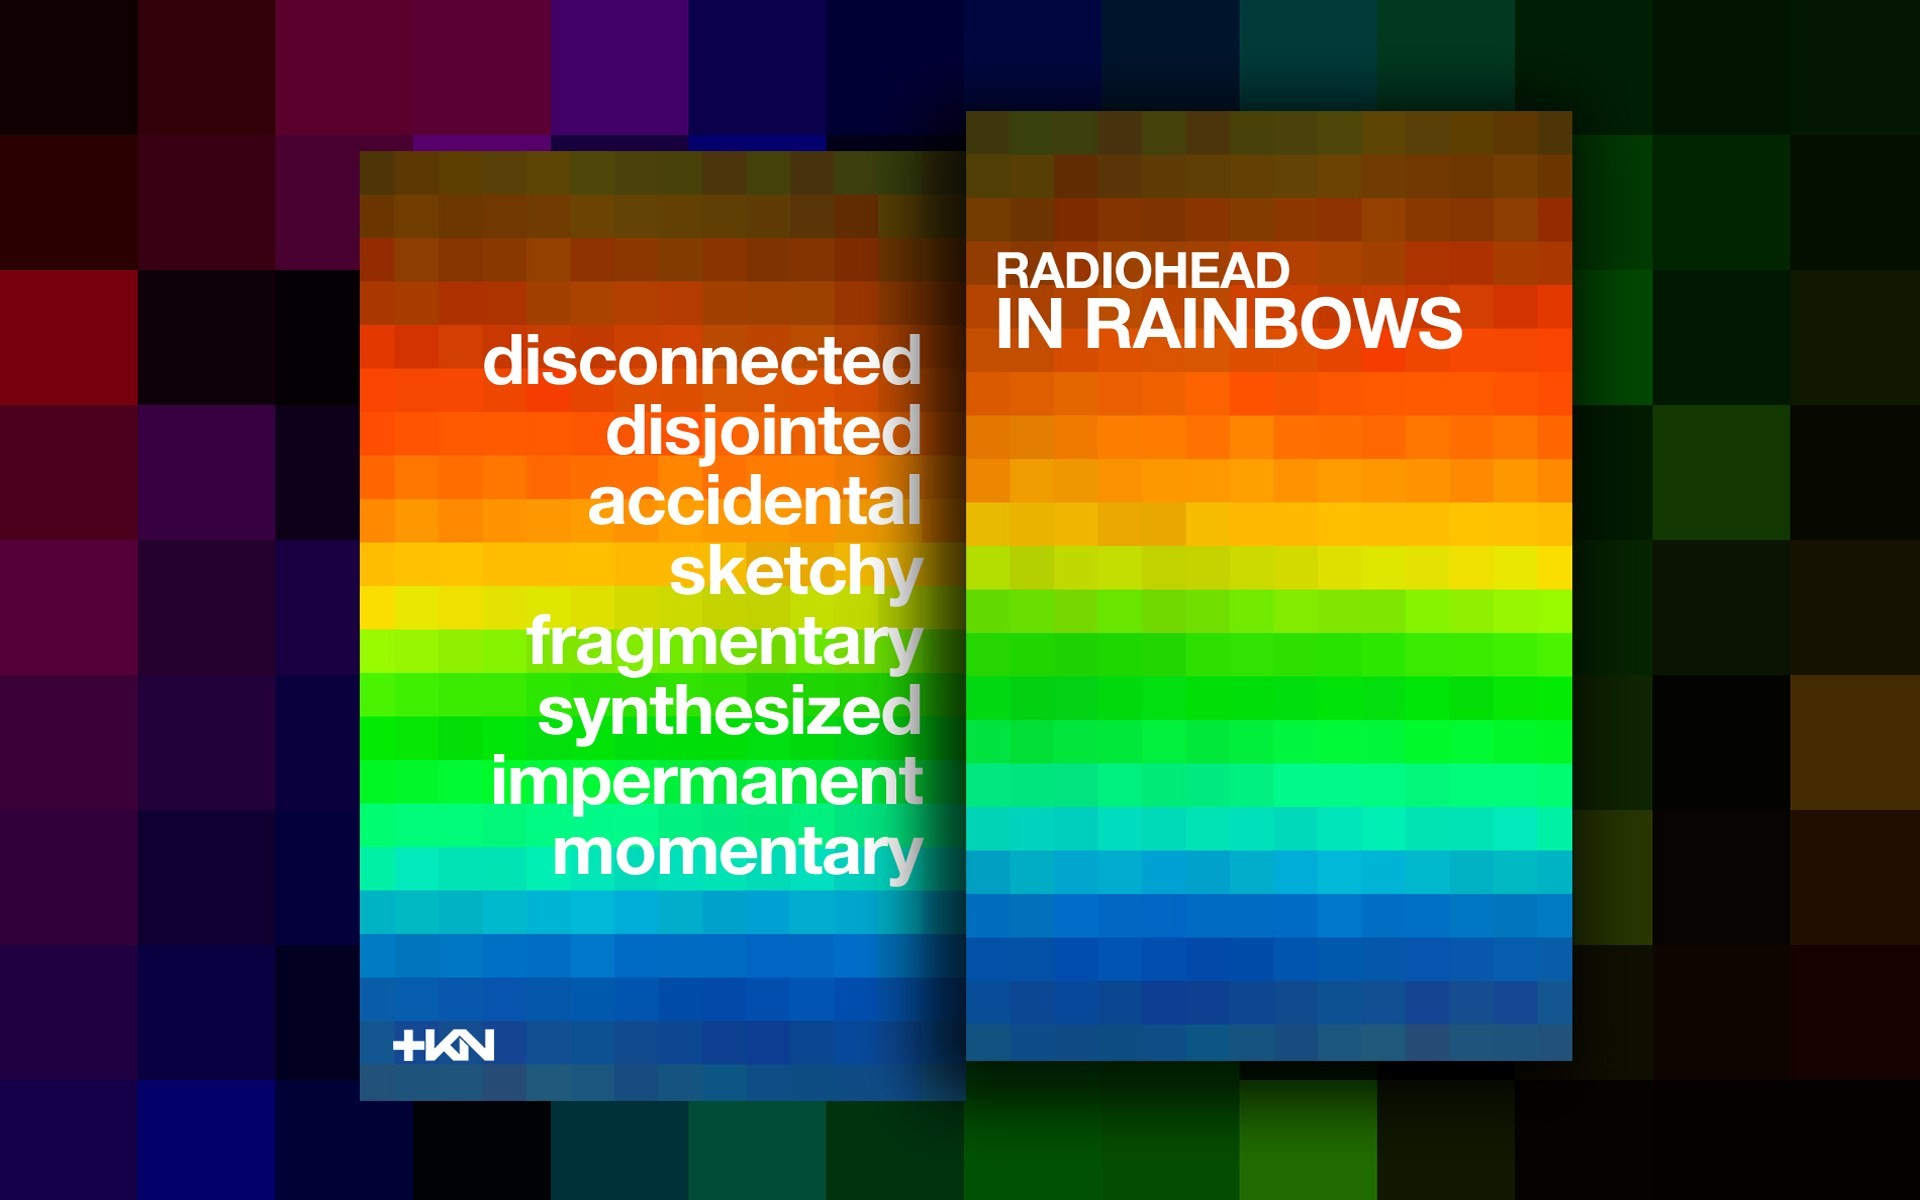 1920x1200 Radiohead Countdown Wallpaper: #7 of 7 In Rainbows